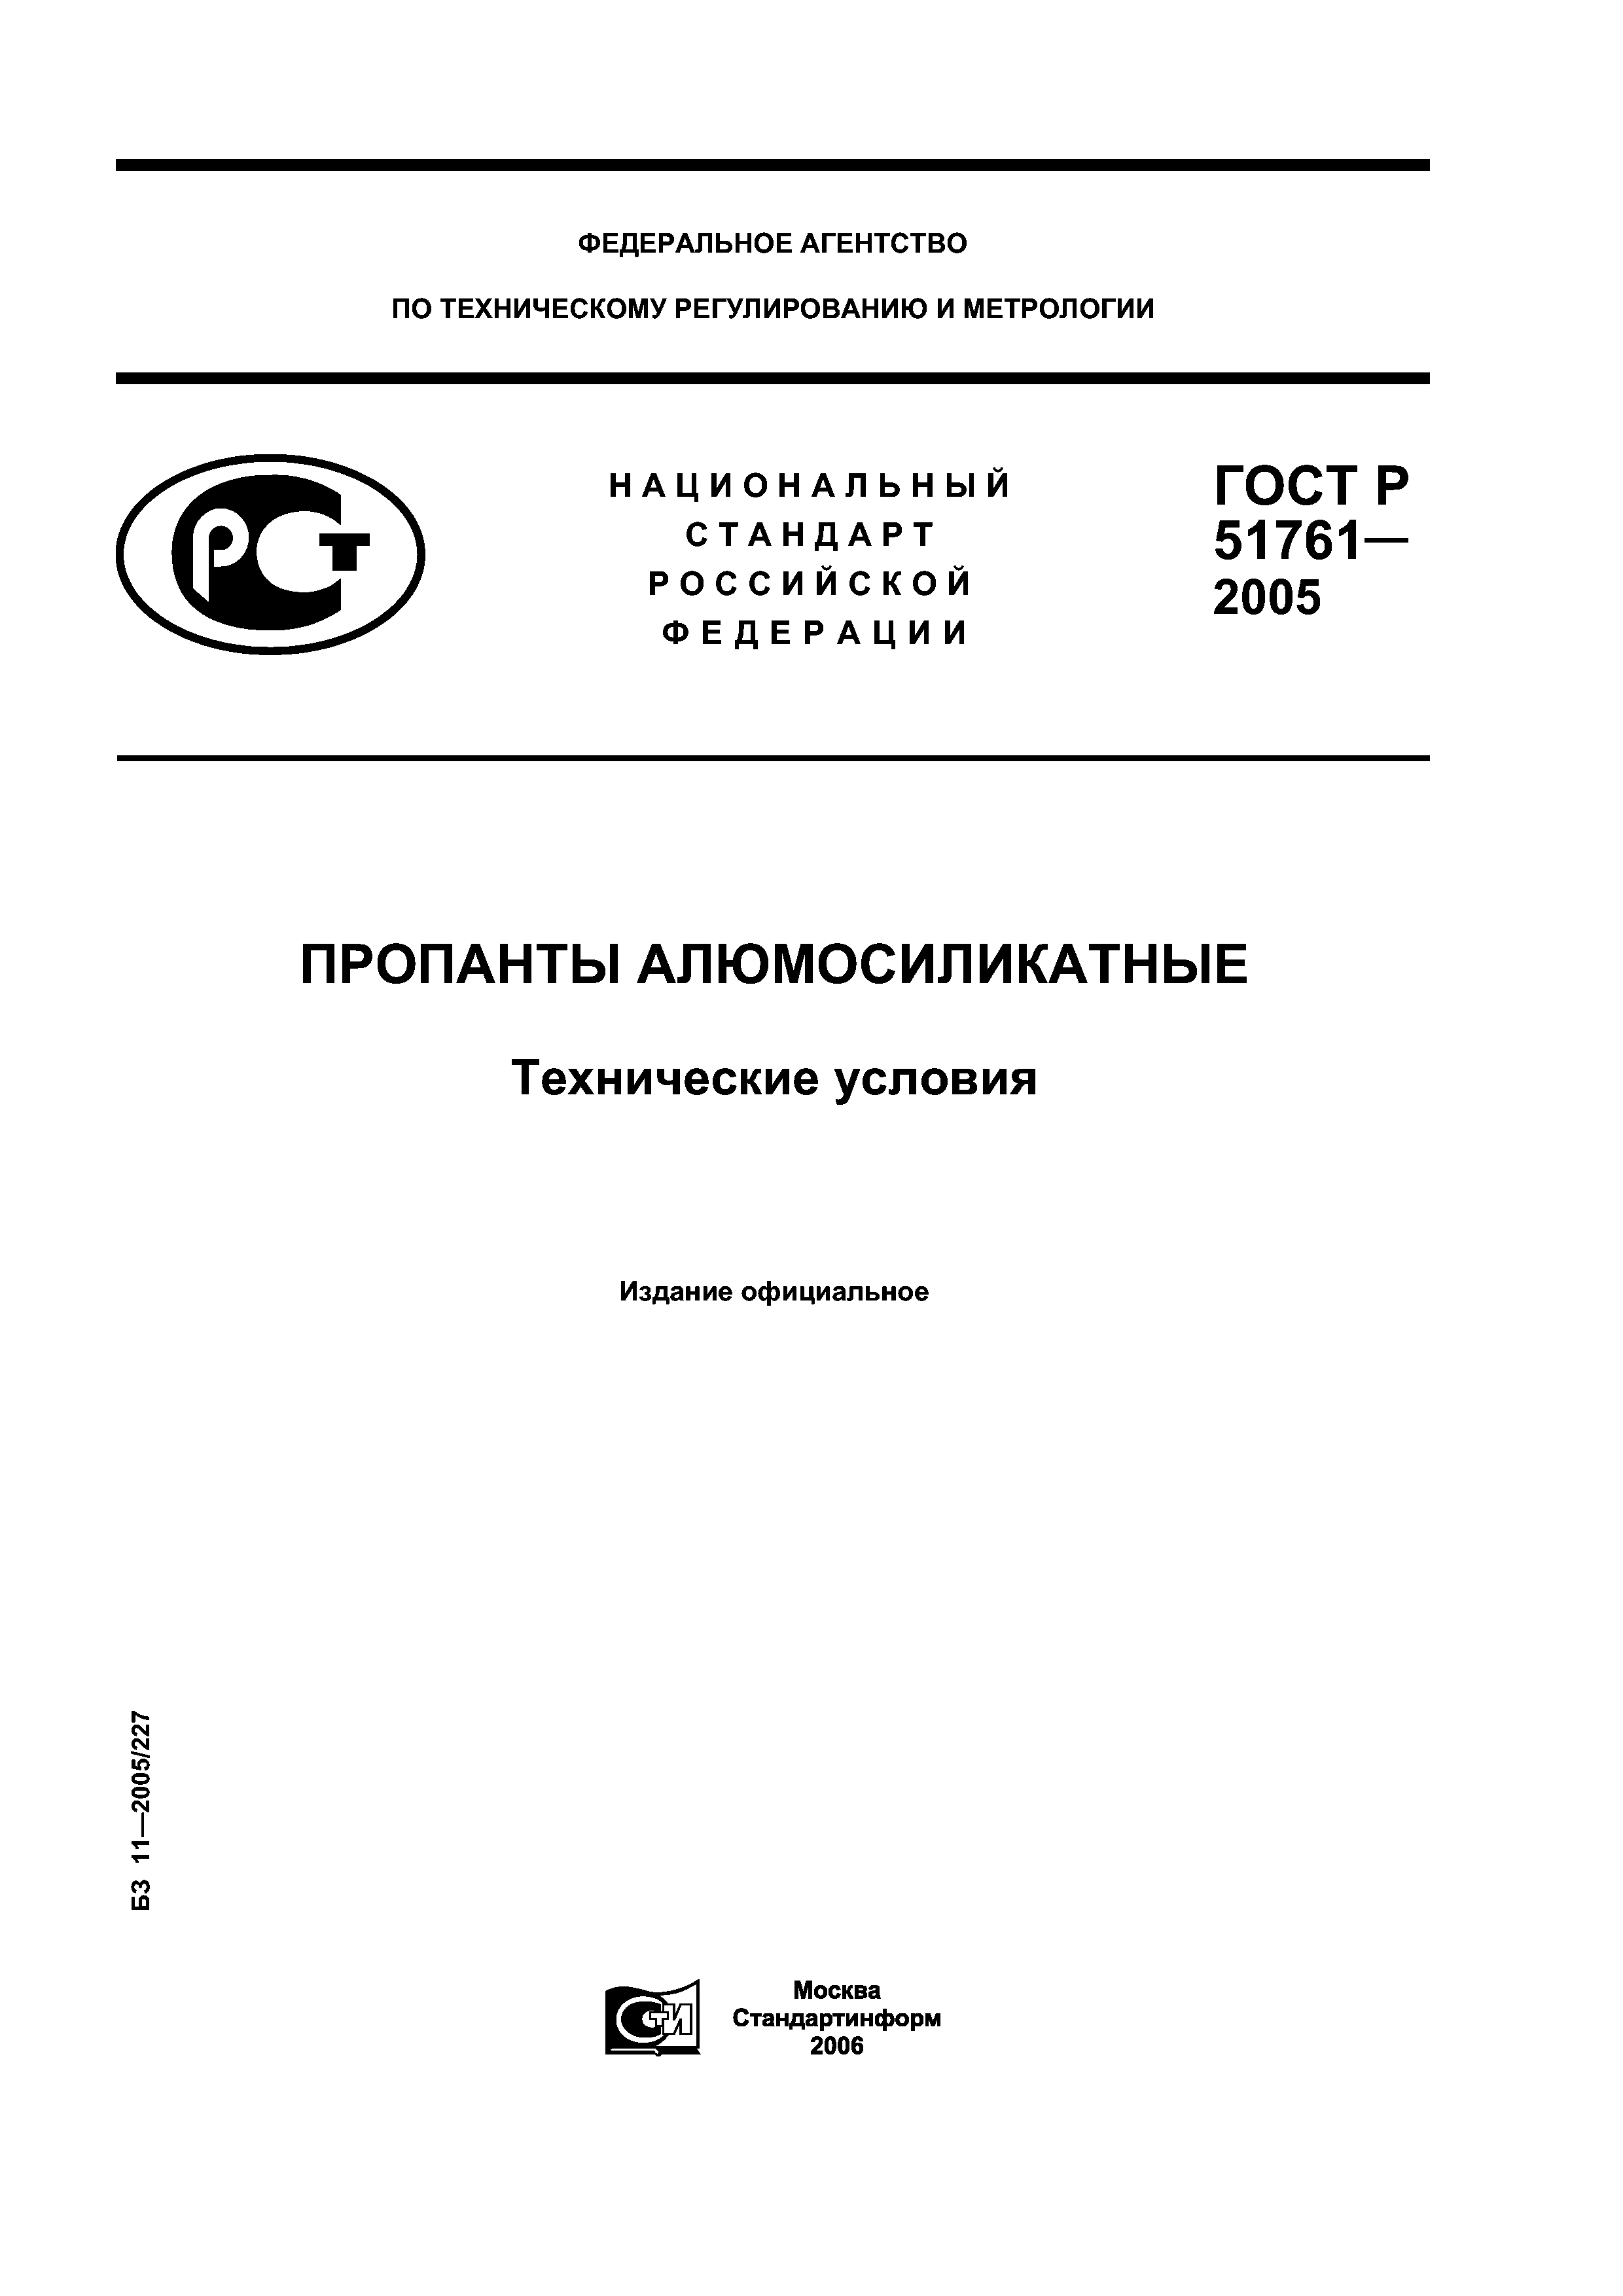 ГОСТ Р 51761-2005